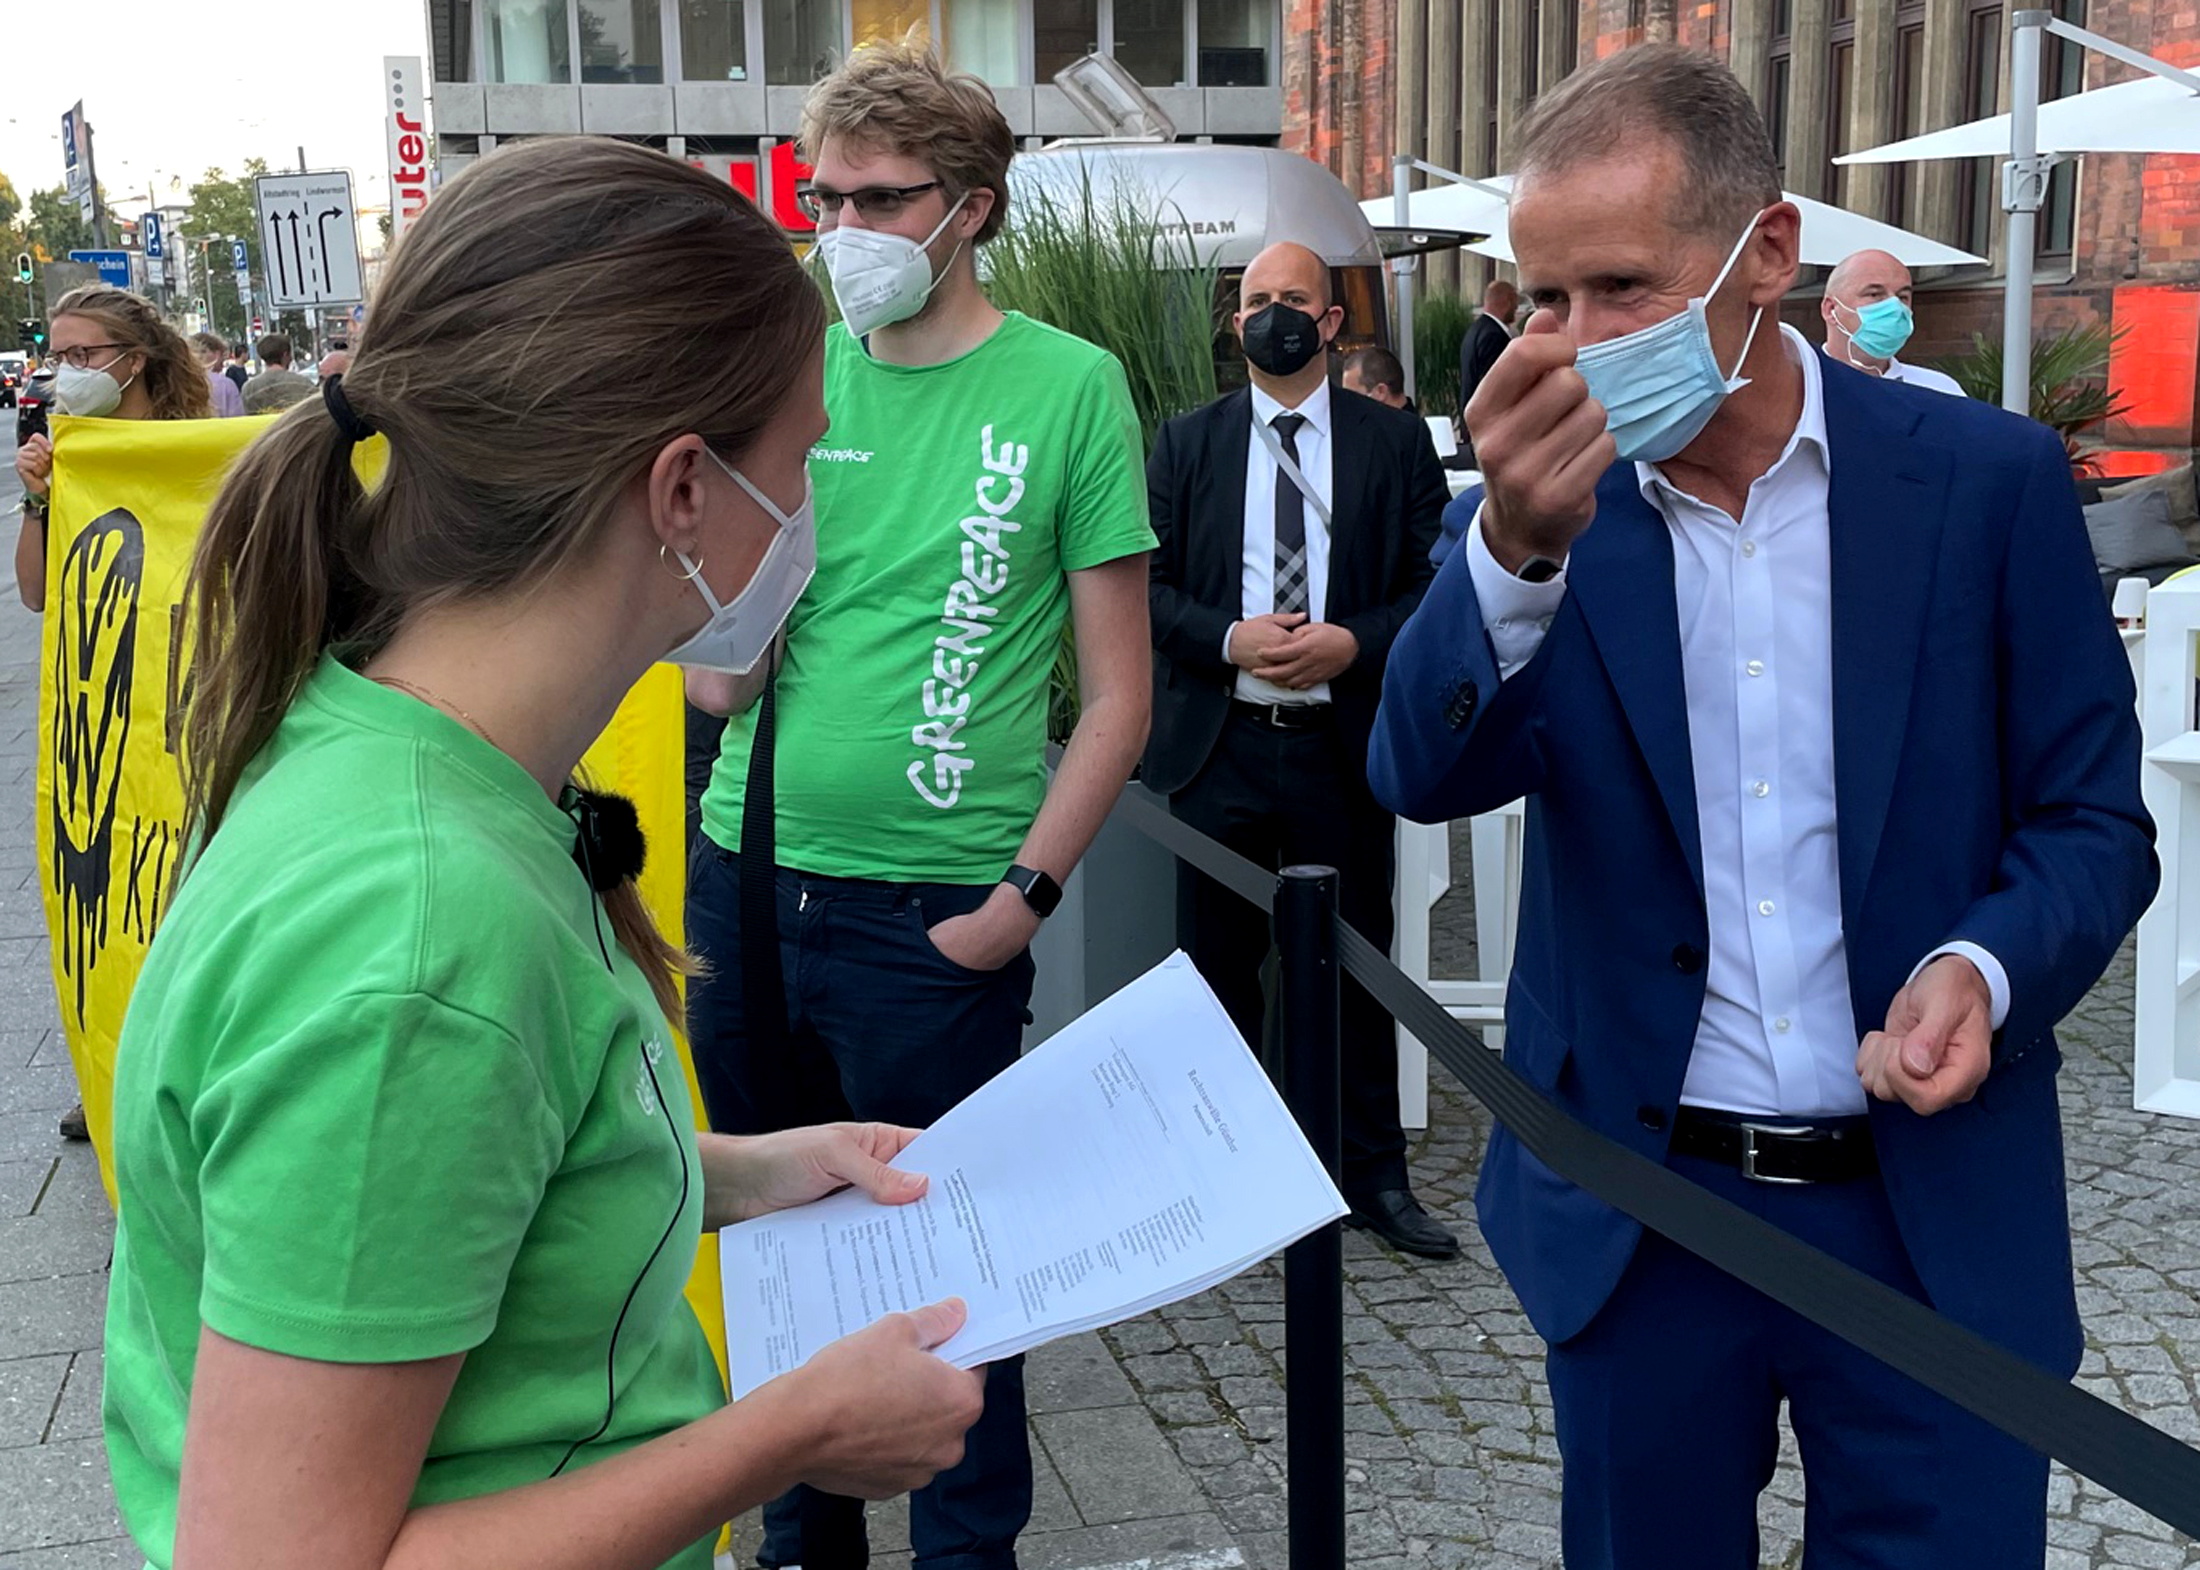 Herbert Diess, CEO of German carmaker Volkswagen AG talks to members of Greenpeace ahead of the Munich Motor Show IAA Mobility 2021, in Munich, Germany, September 5, 2021. REUTERS/Jan Schwartz